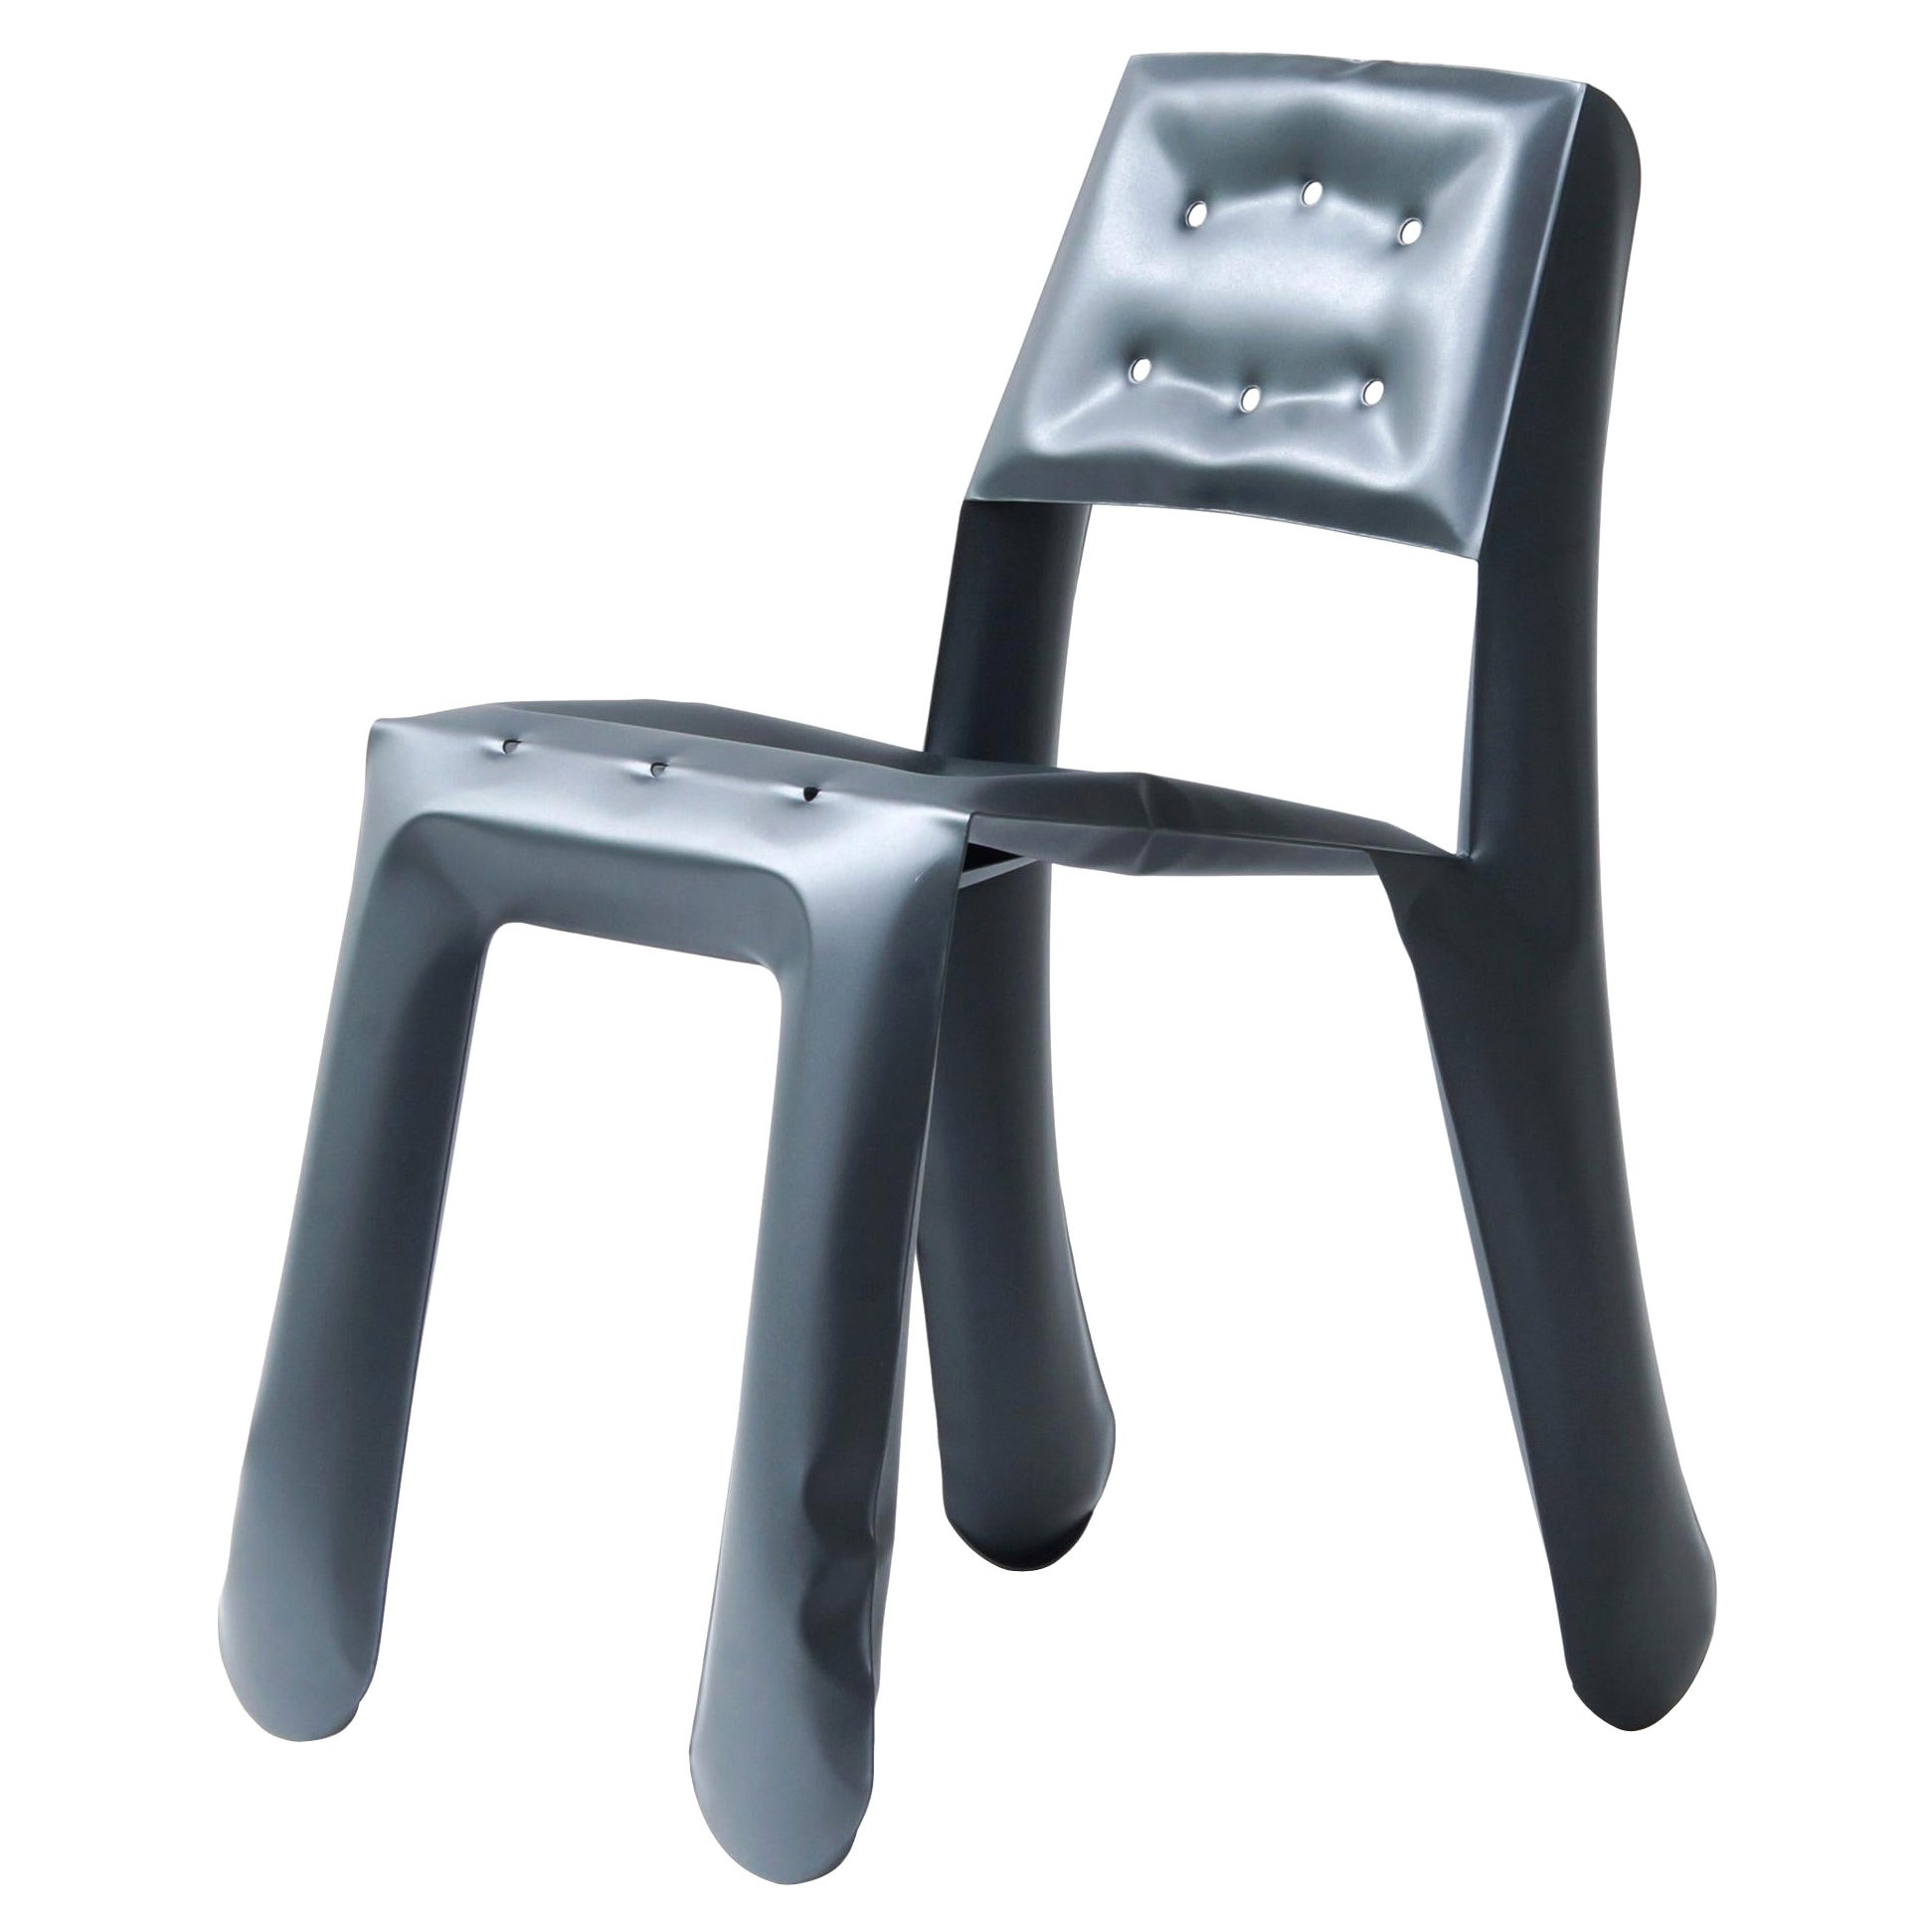 Graphite Aluminum Chippensteel 0.5 Sculptural Chair by Zieta For Sale